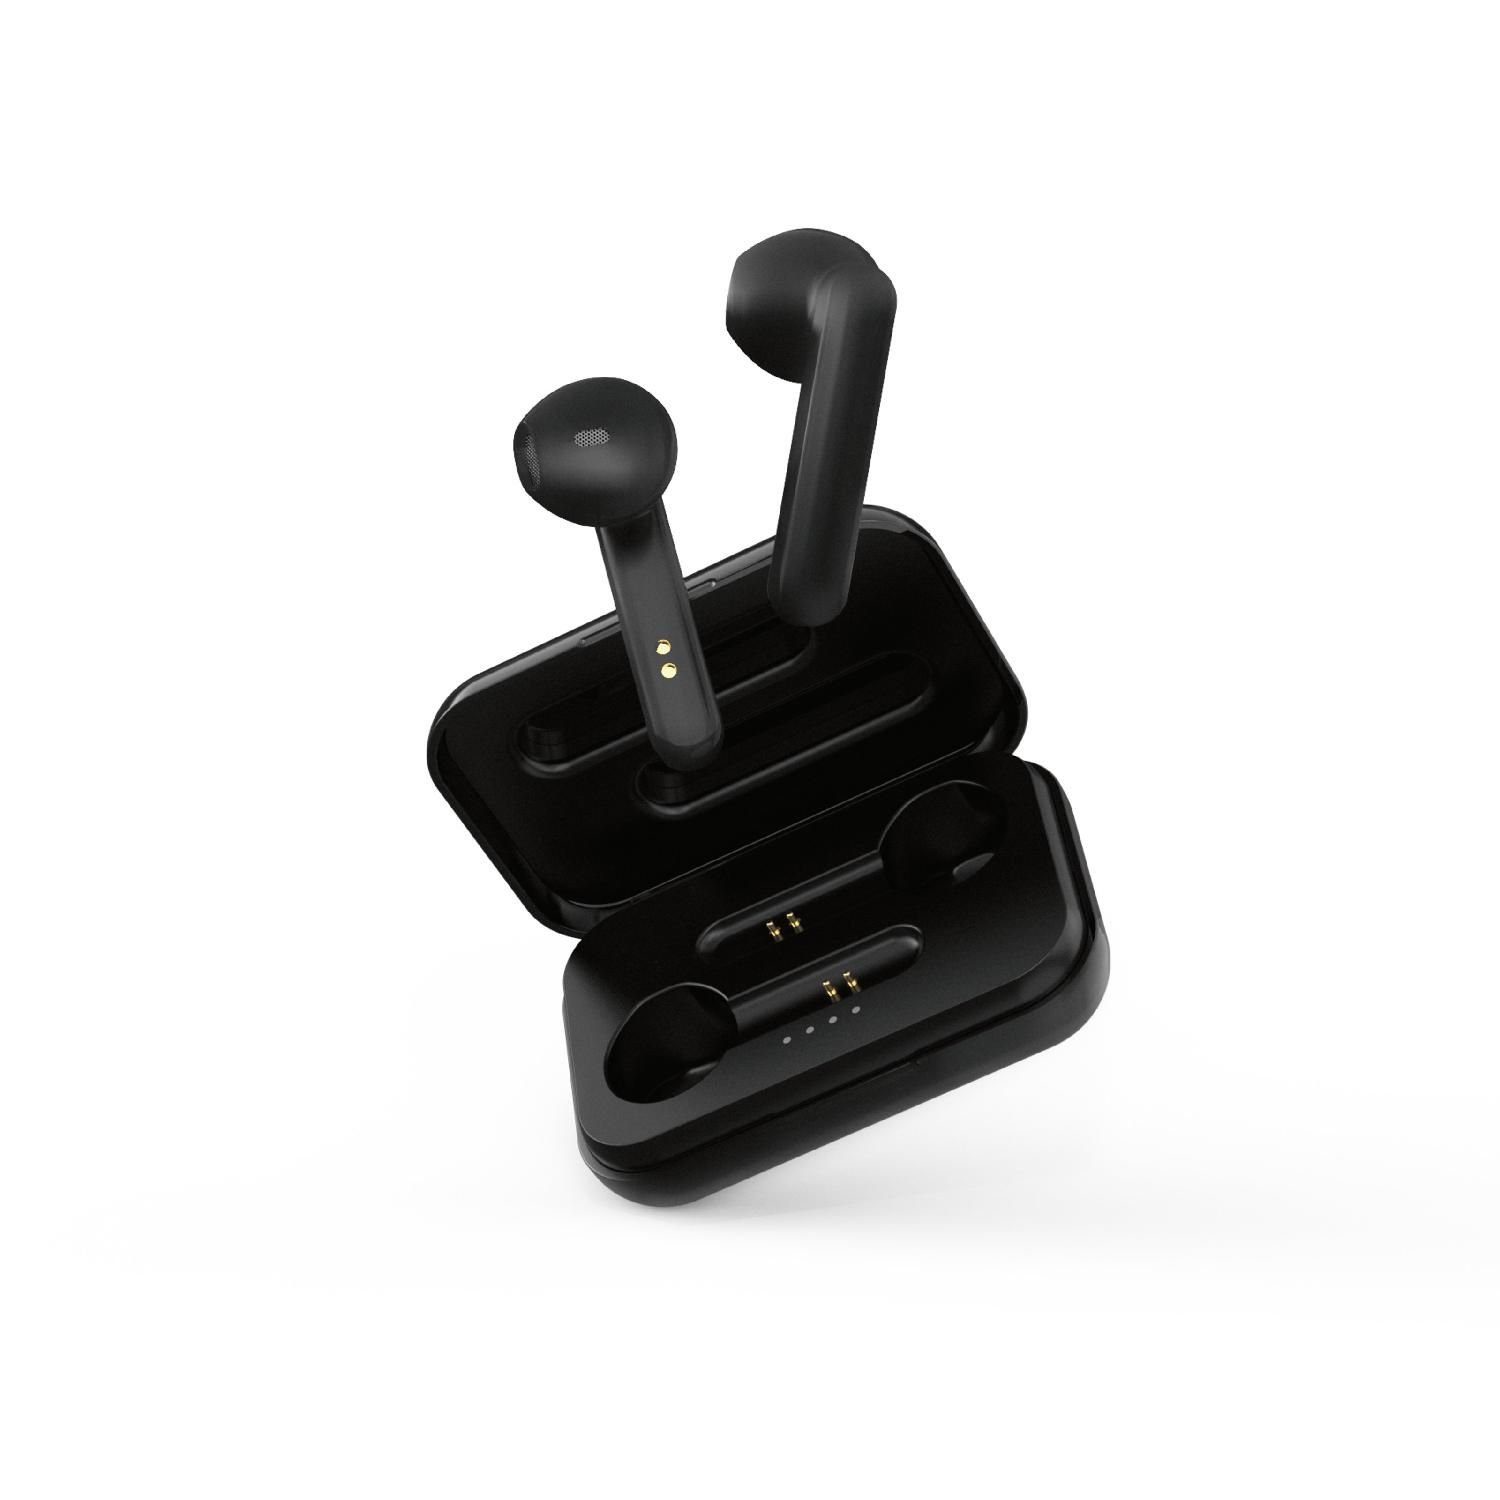 TWS-104 Kopfhörer Bluetooth Kopfhörer 5 STREETZ Herstellergarantie) Touchcontrol Mikrofon, Kabellos inkl. Jahre (integriertes Semi-In-Ear